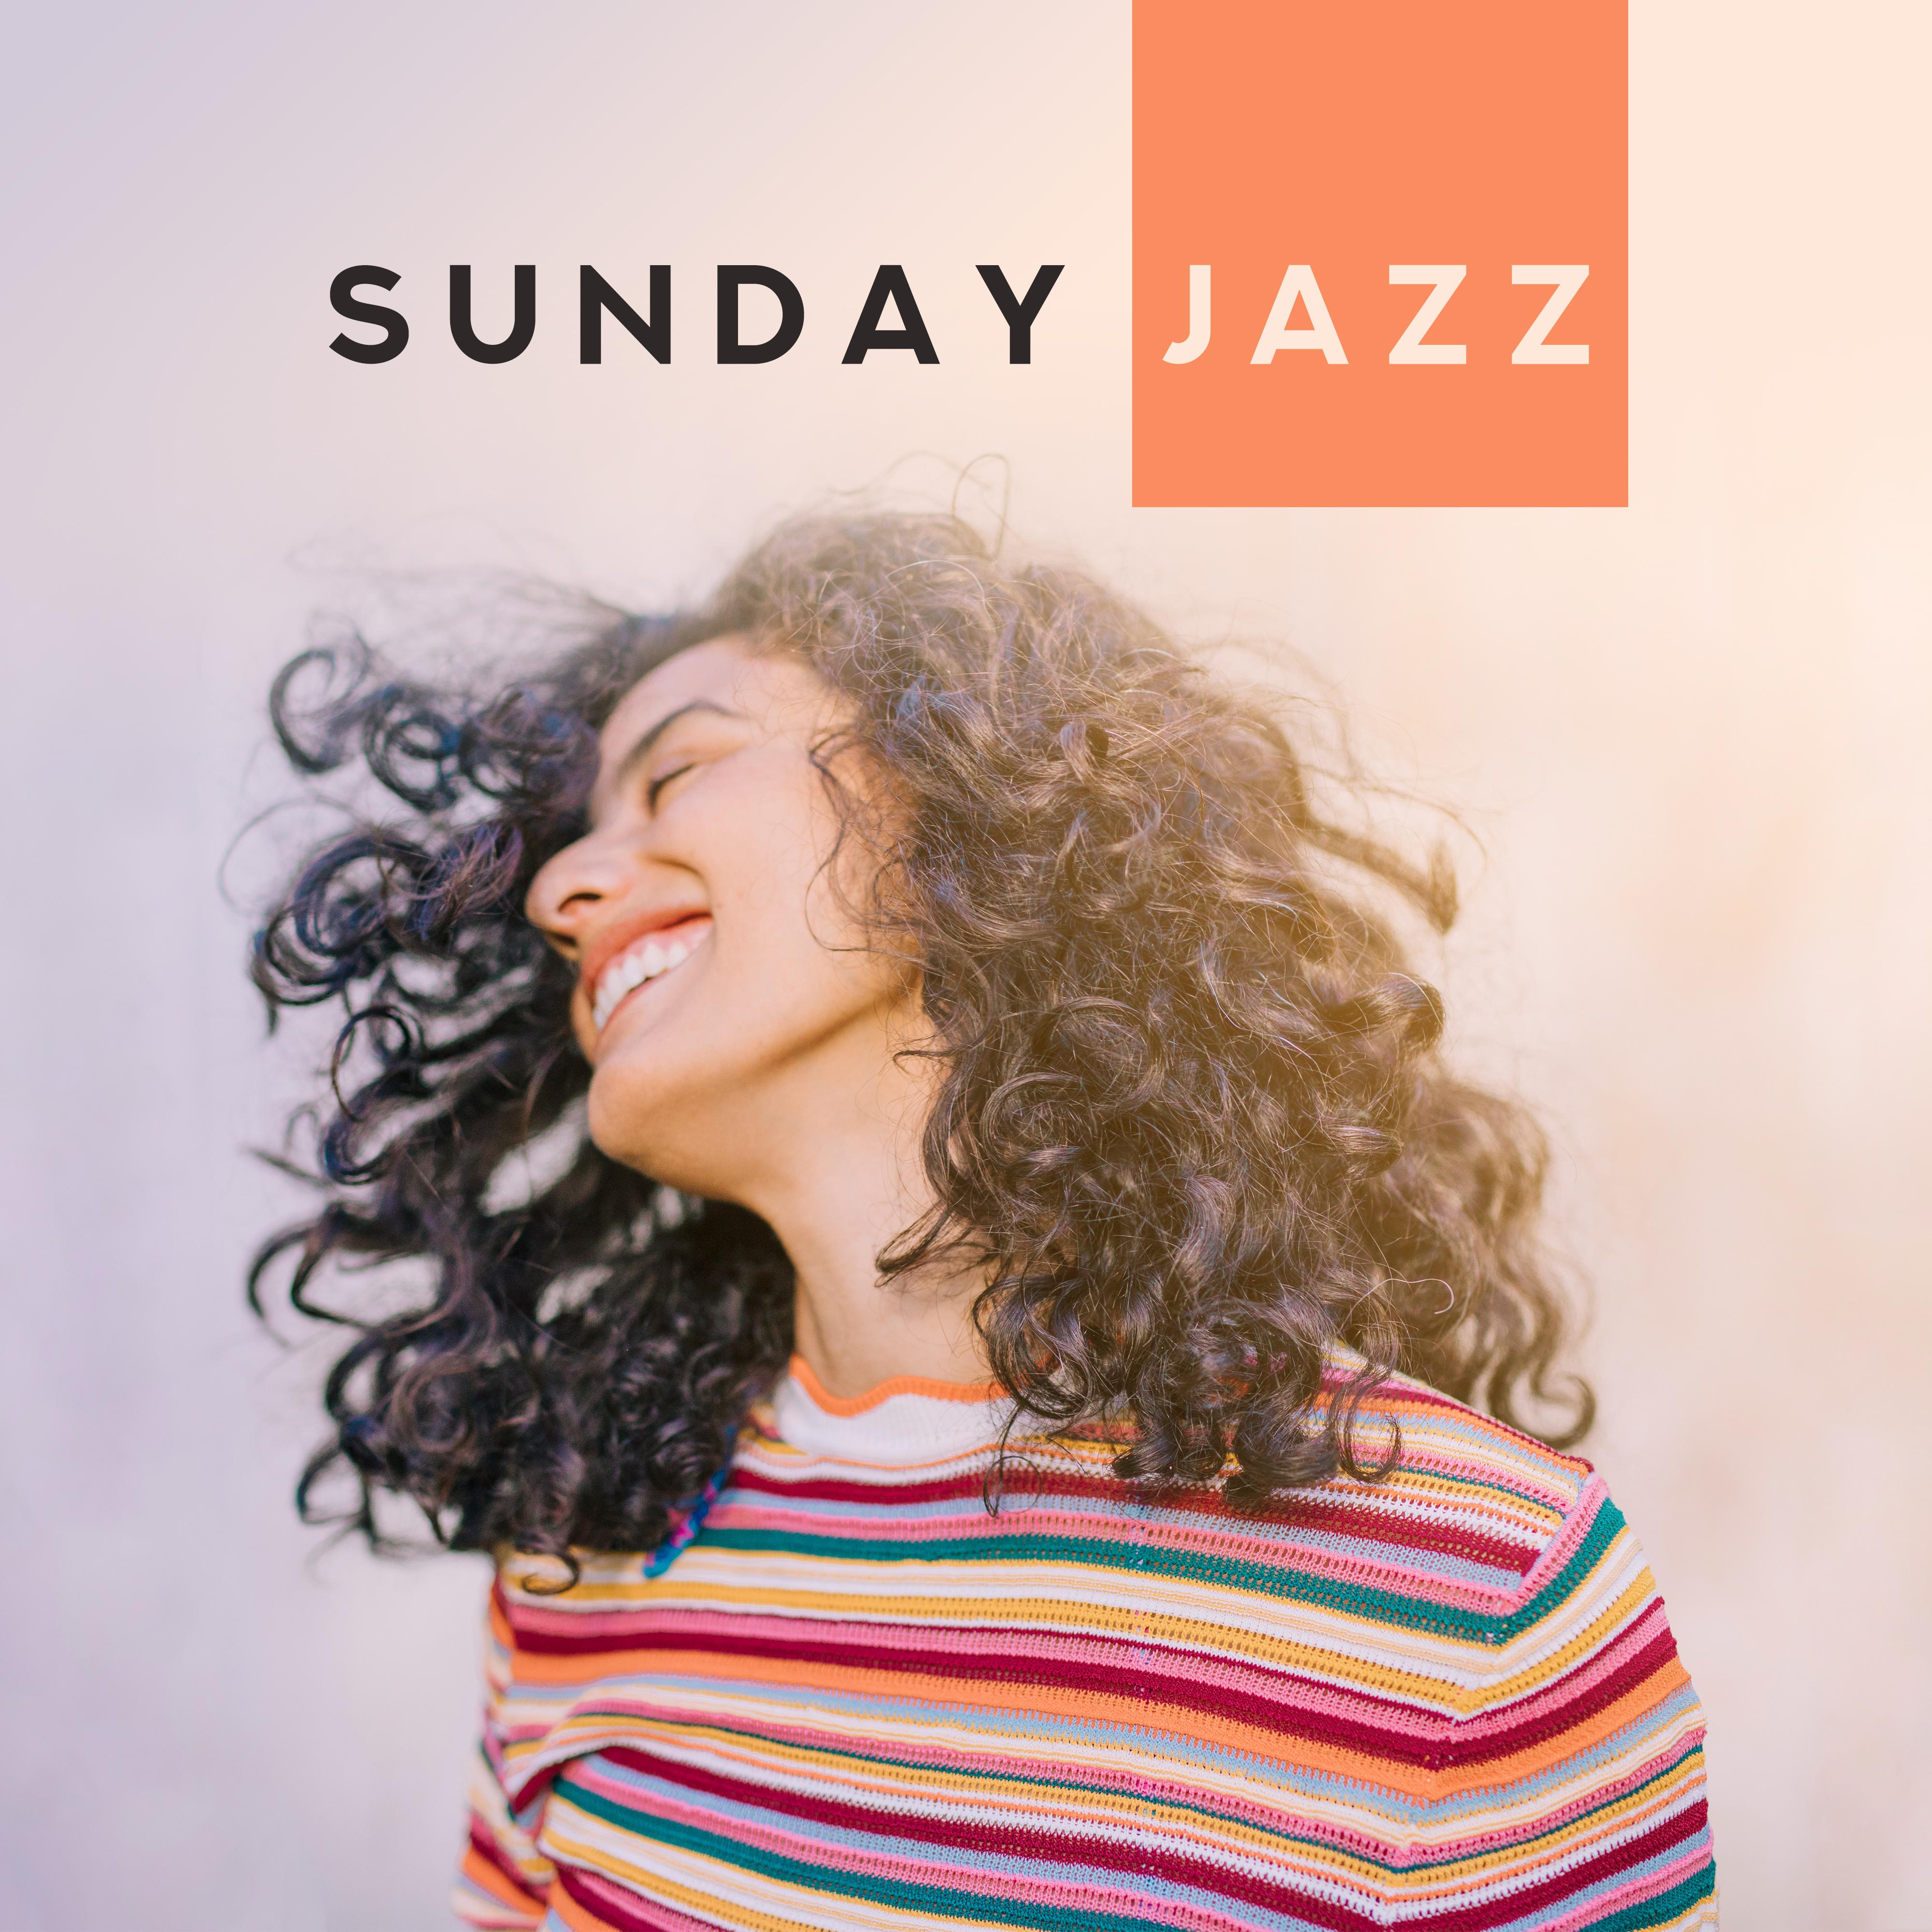 Sunday Jazz  Instrumental Songs Reduce Stress, Smooth Jazz for Sleep  Rest, Jazz Vibes, Instrumental Jazz Music Ambient